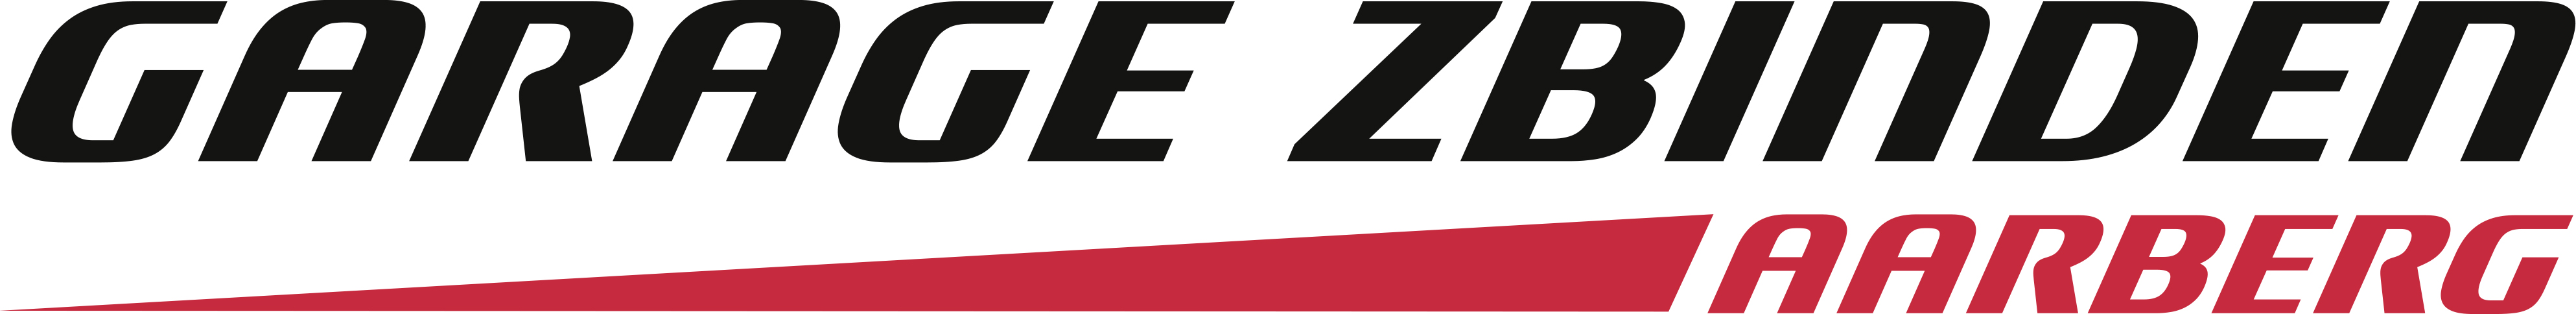 Logo Garage Zbinden Aarberg GmbH